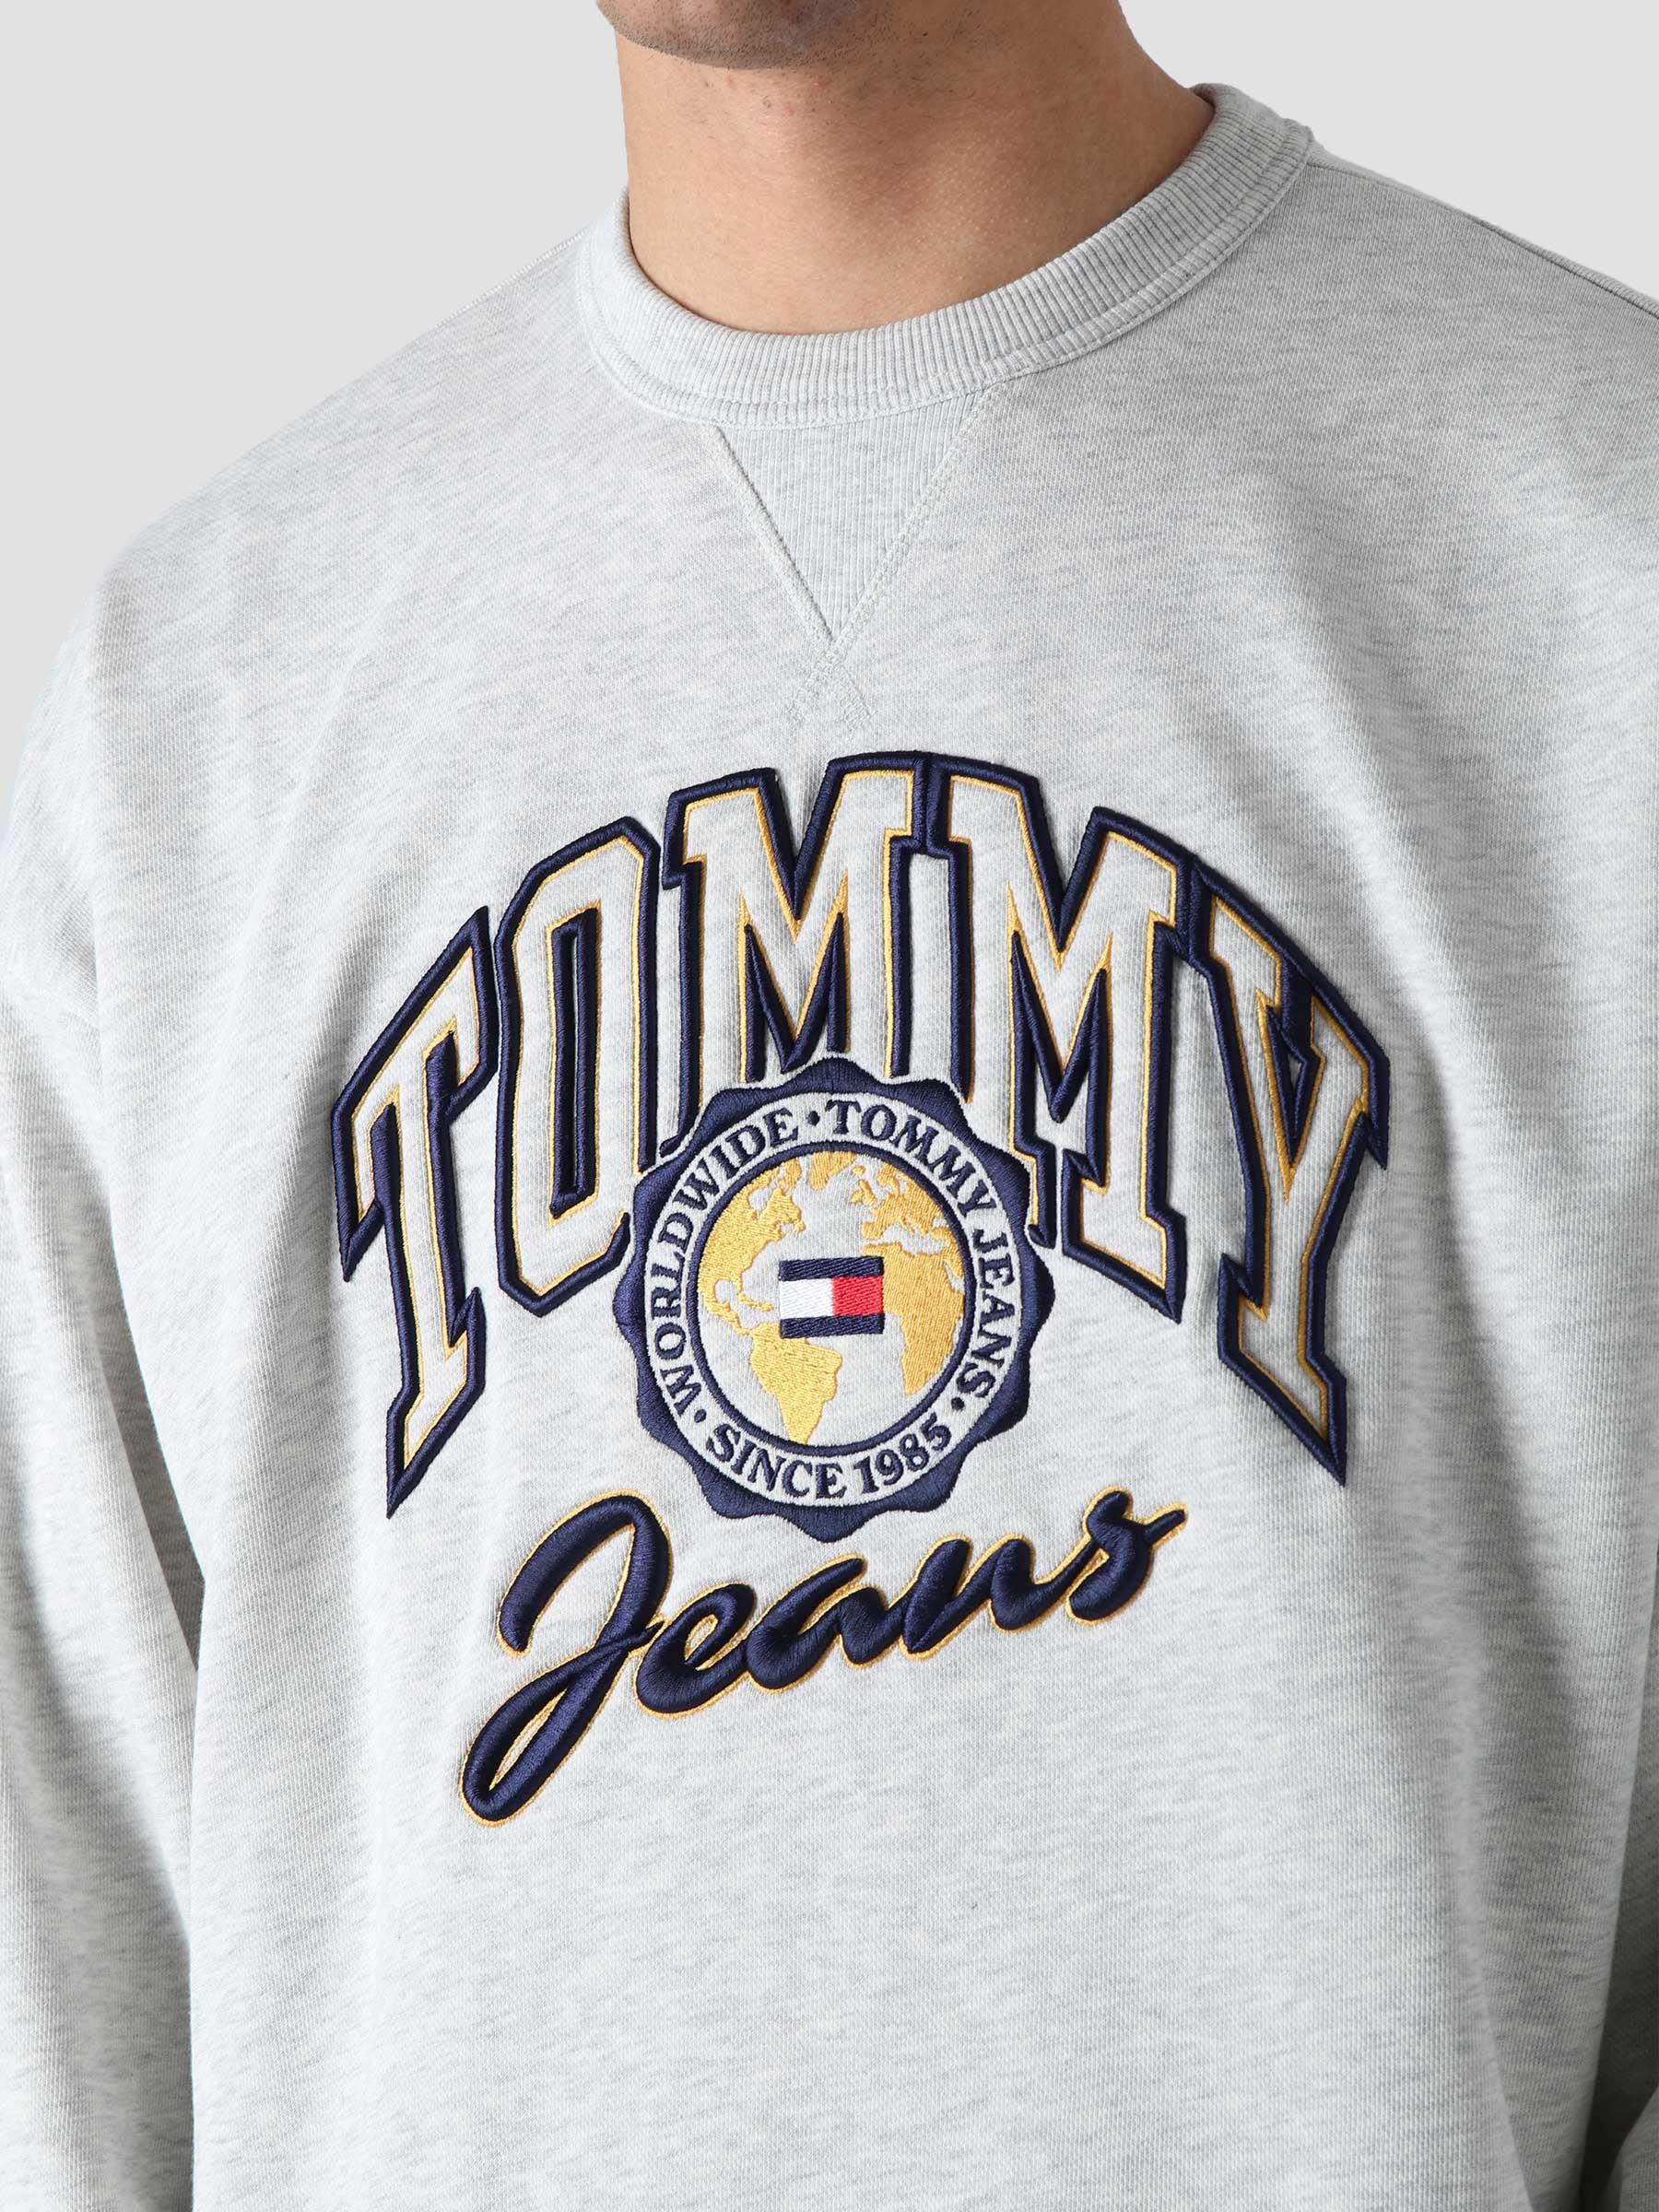 Htr Grey College Jeans Freshcotton Silver Archive Tommy Crew TJM -